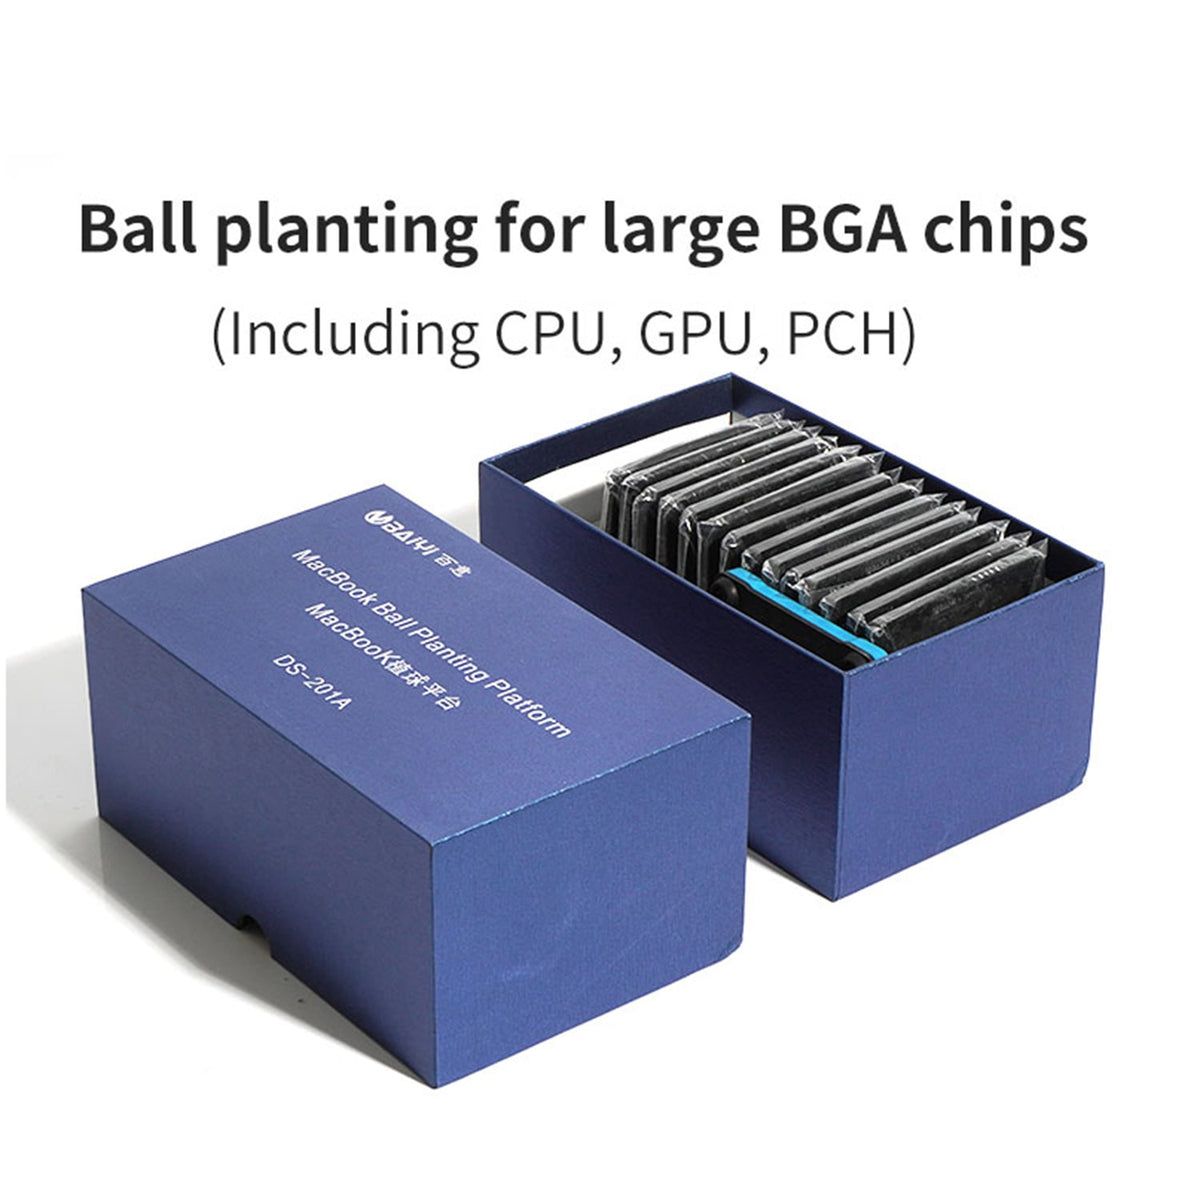 DS-201A MACBOOK BALL PLANTING PLATFORM FOR CPU GPU PCH BGA CHIPS